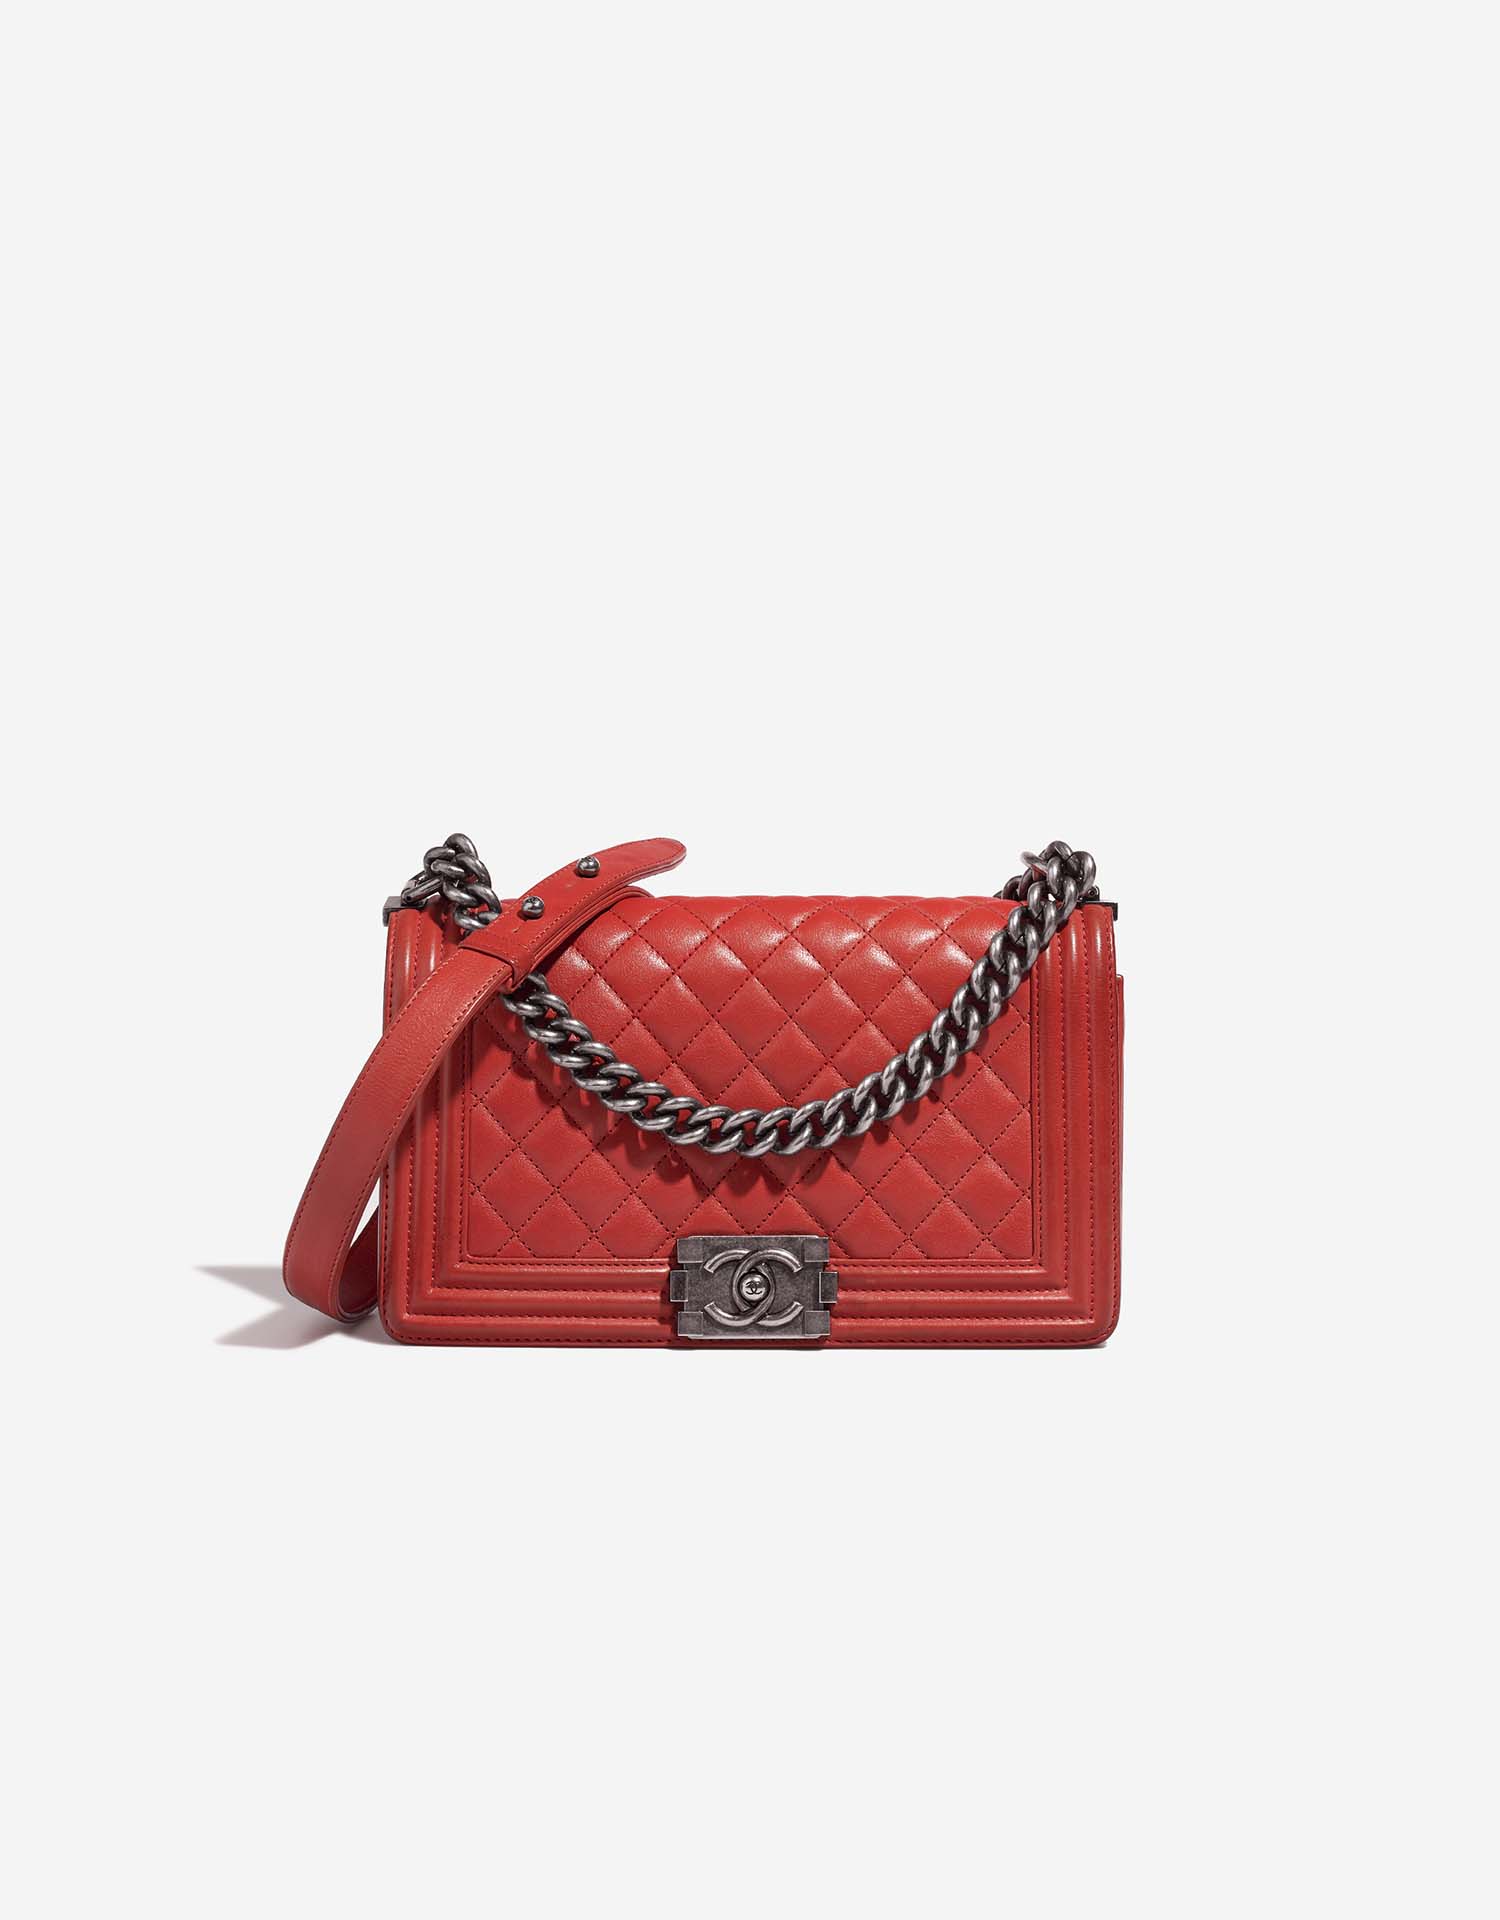 Chanel Old Medium Red Boy Bag